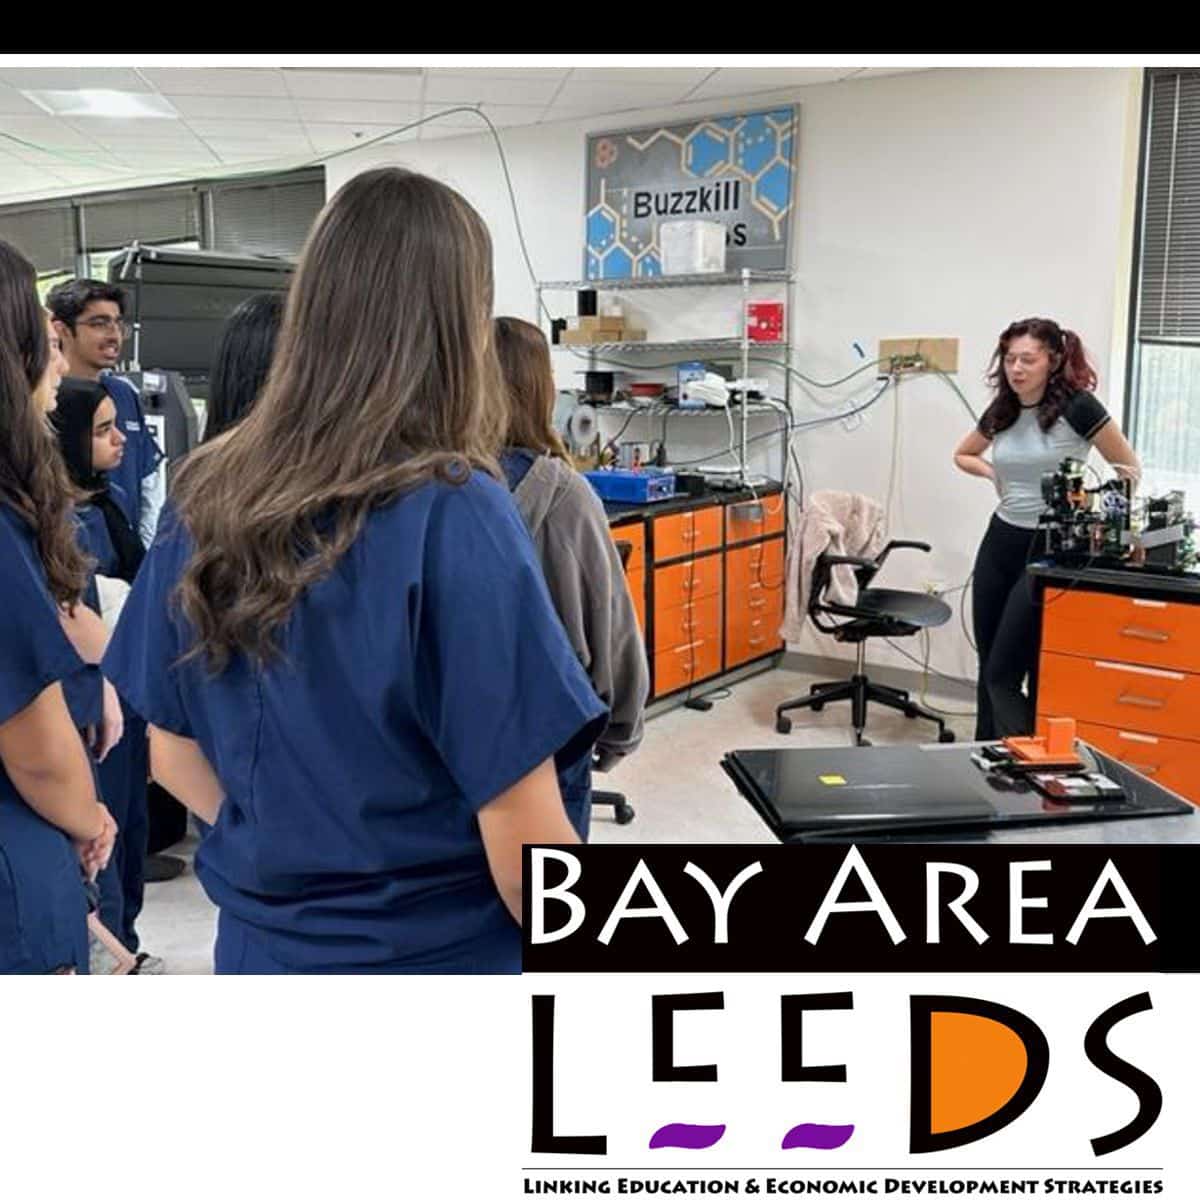 Bay Area LEEDS Helps Build Workforce of the Future